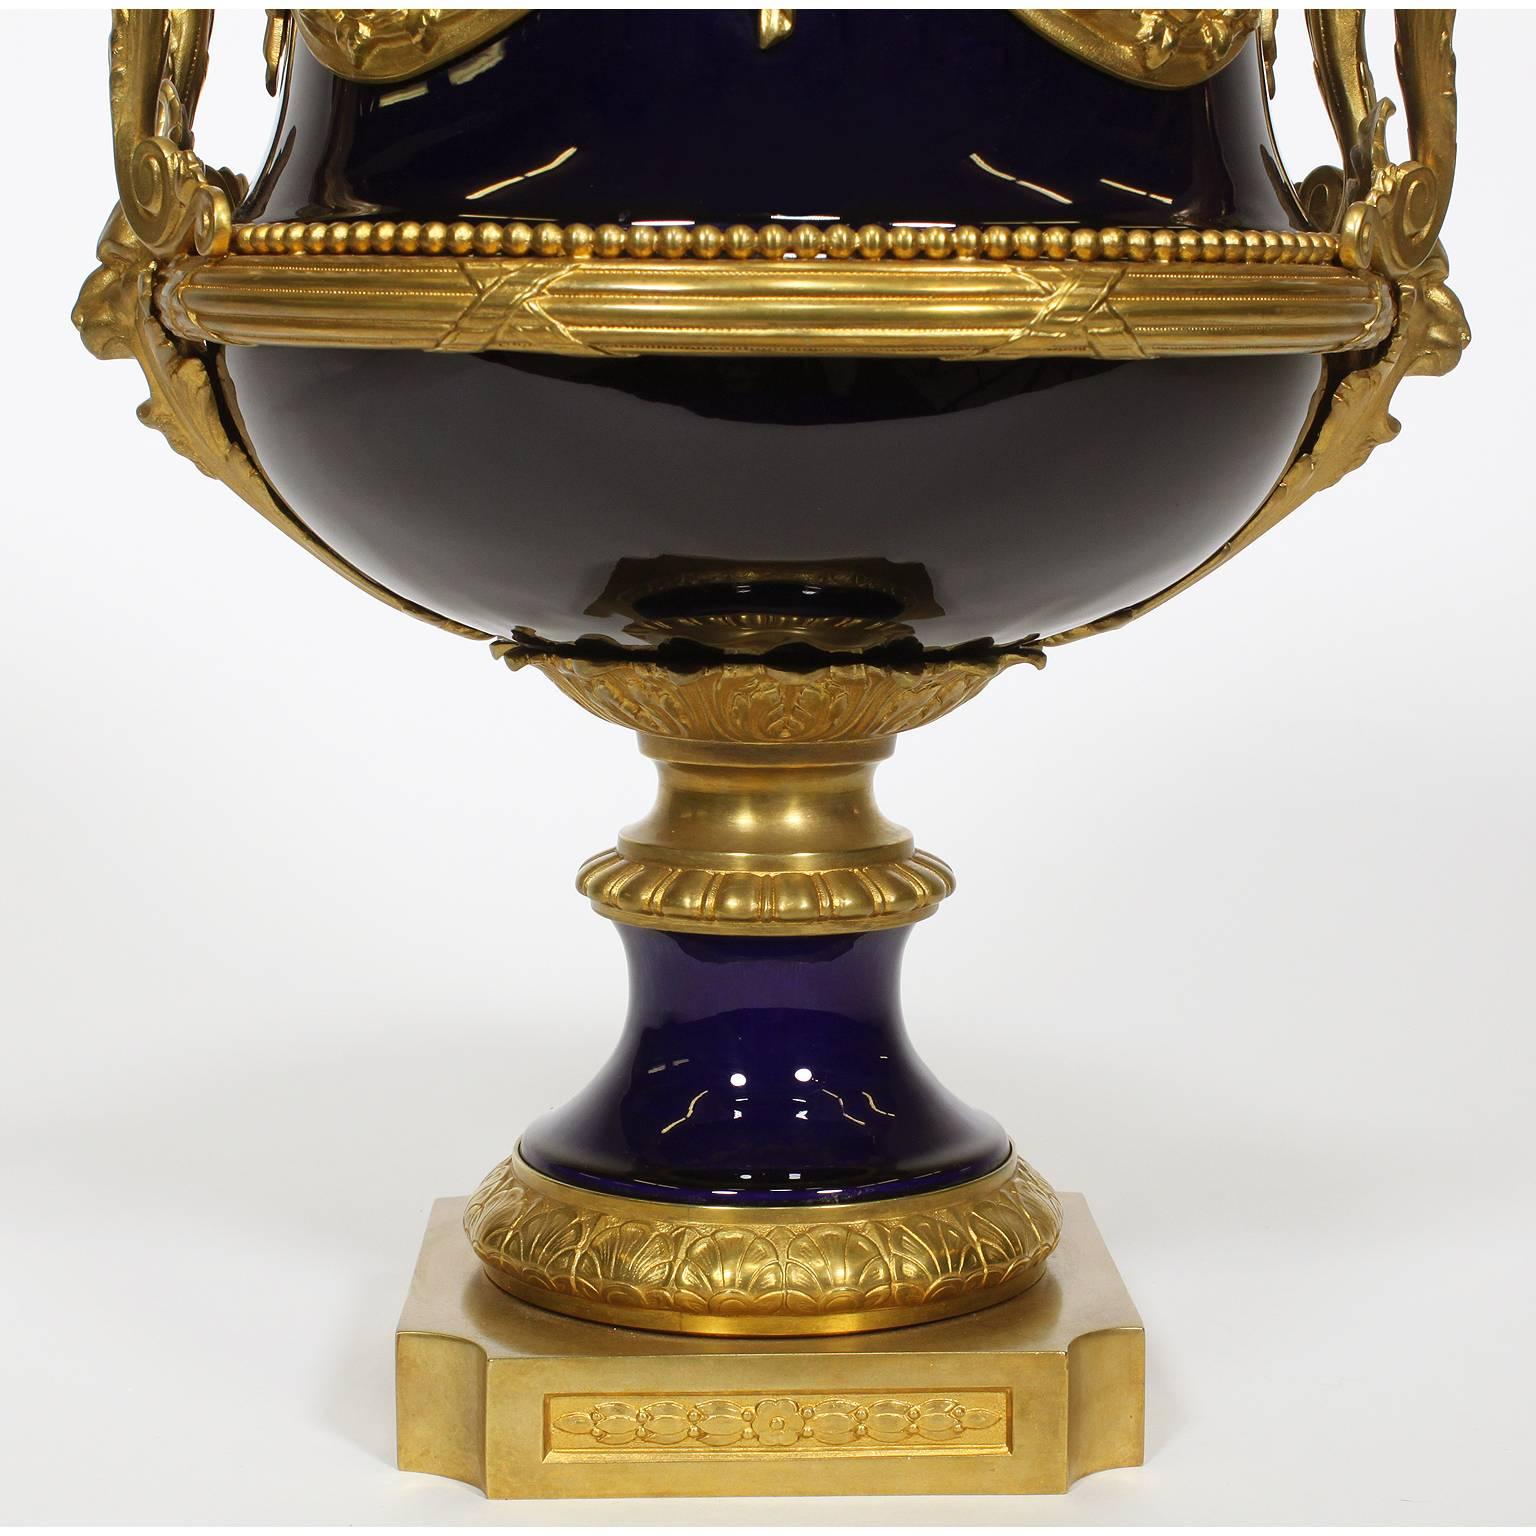 French Napoleon III Cobalt Blue Porcelain & Gilt Bronze-Mounted Urn, Attr. to Sevres